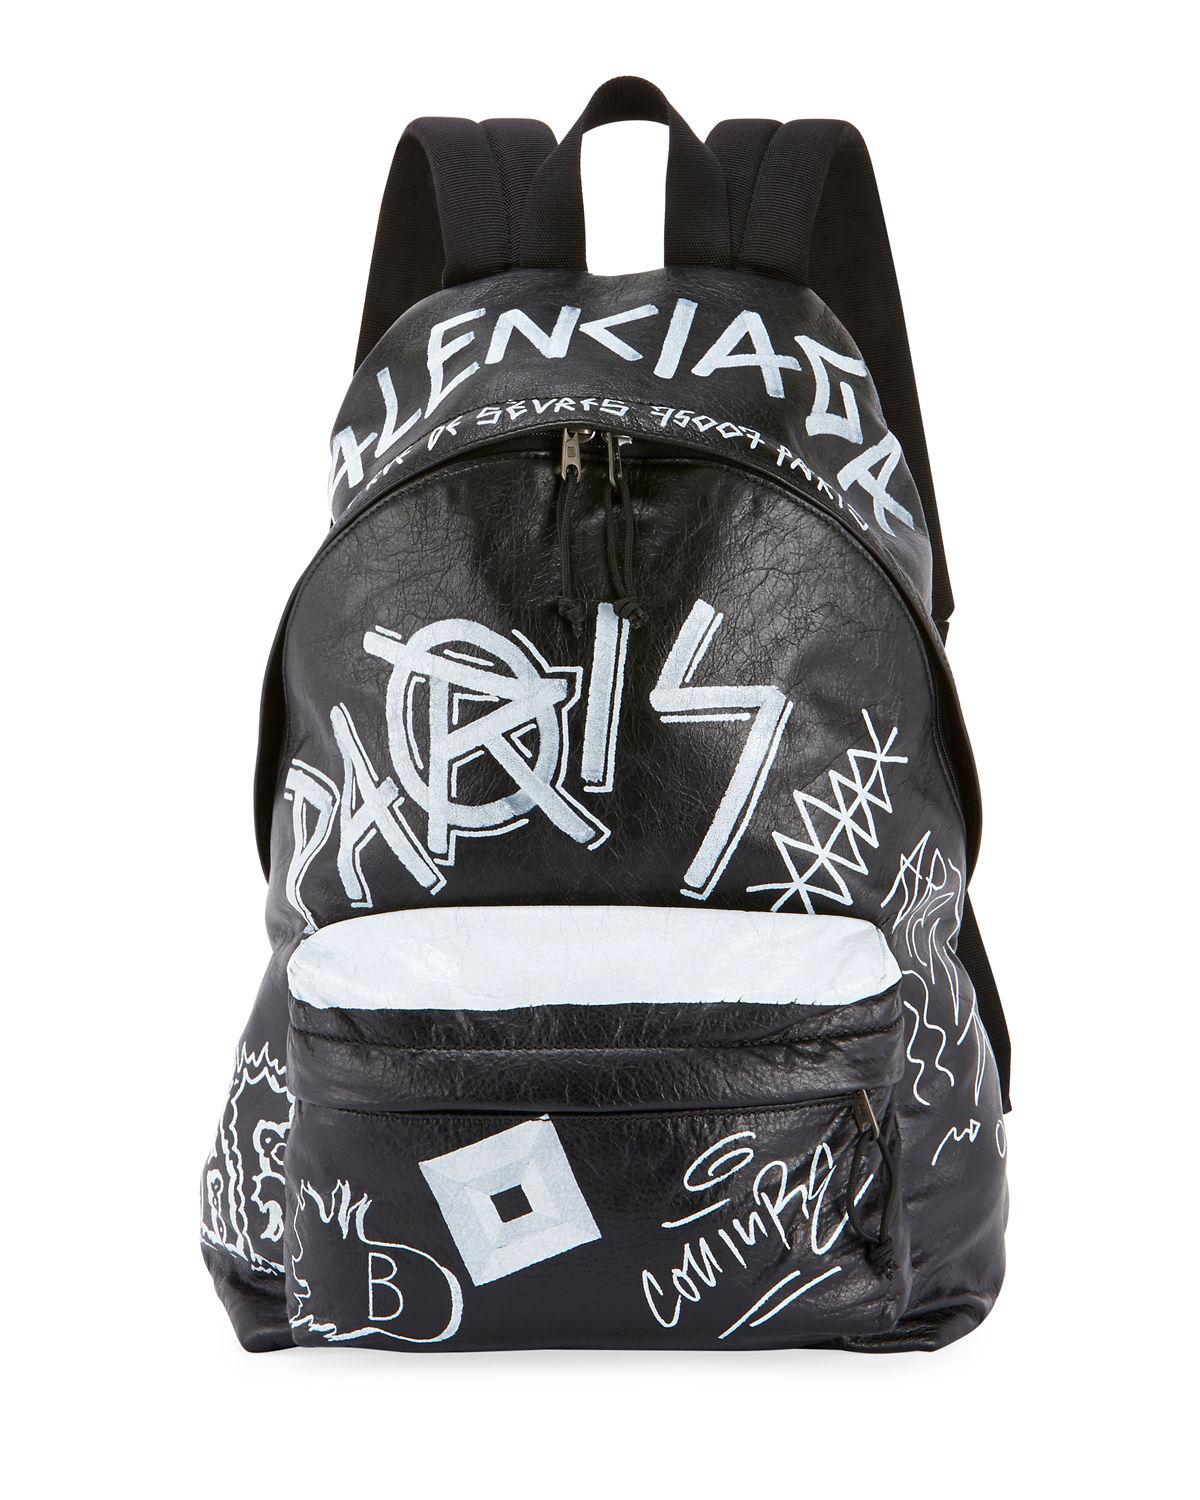 Balenciaga Men's Graffiti Leather Backpack in Black/White (Black) for ...